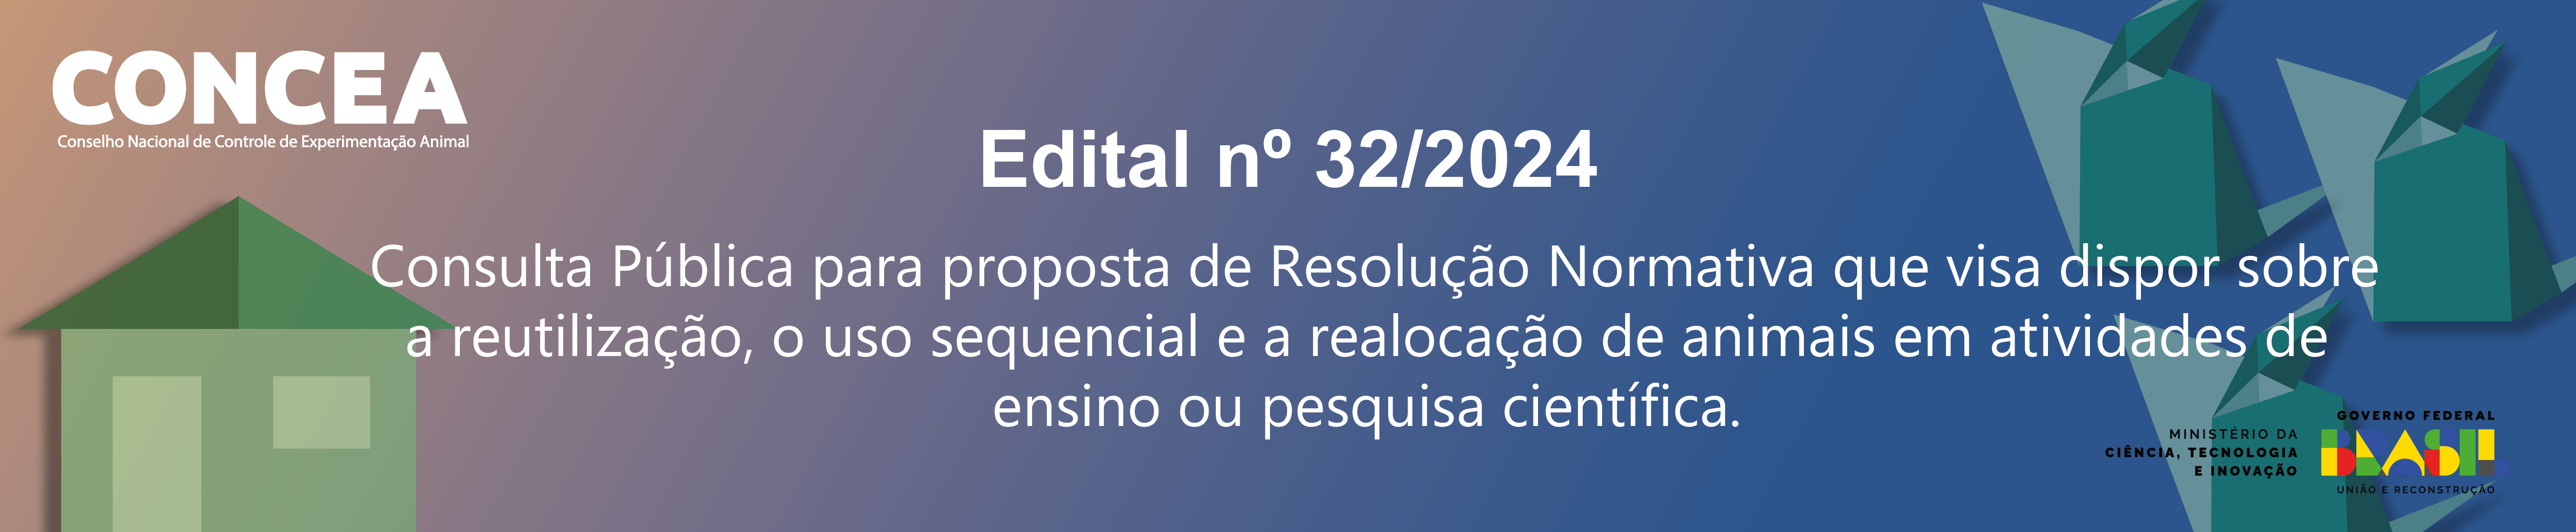 Edital nº 32/2024